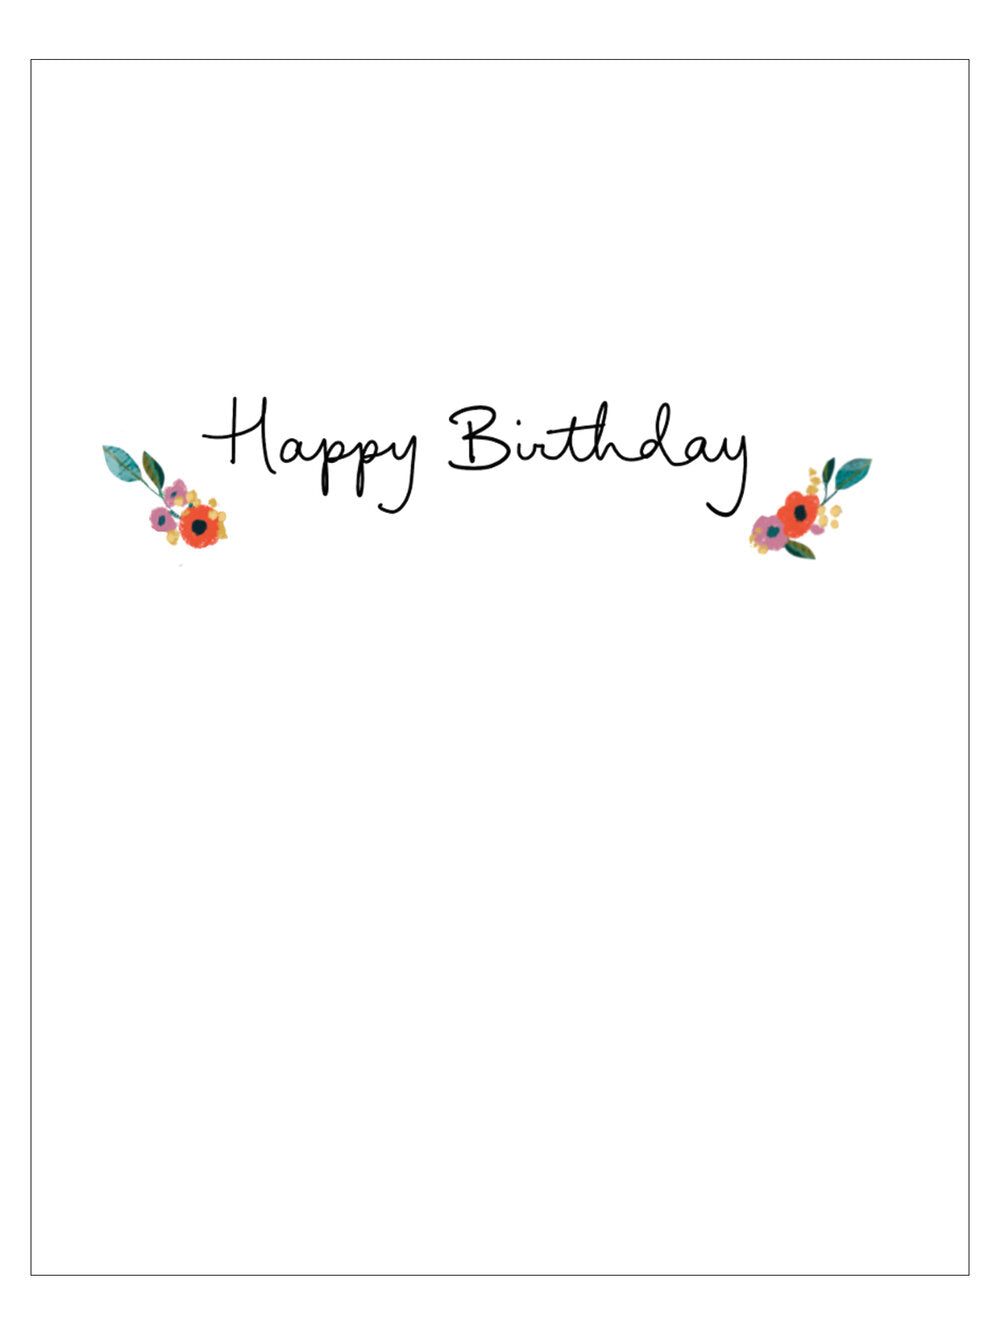 Bookstore Birthday Card